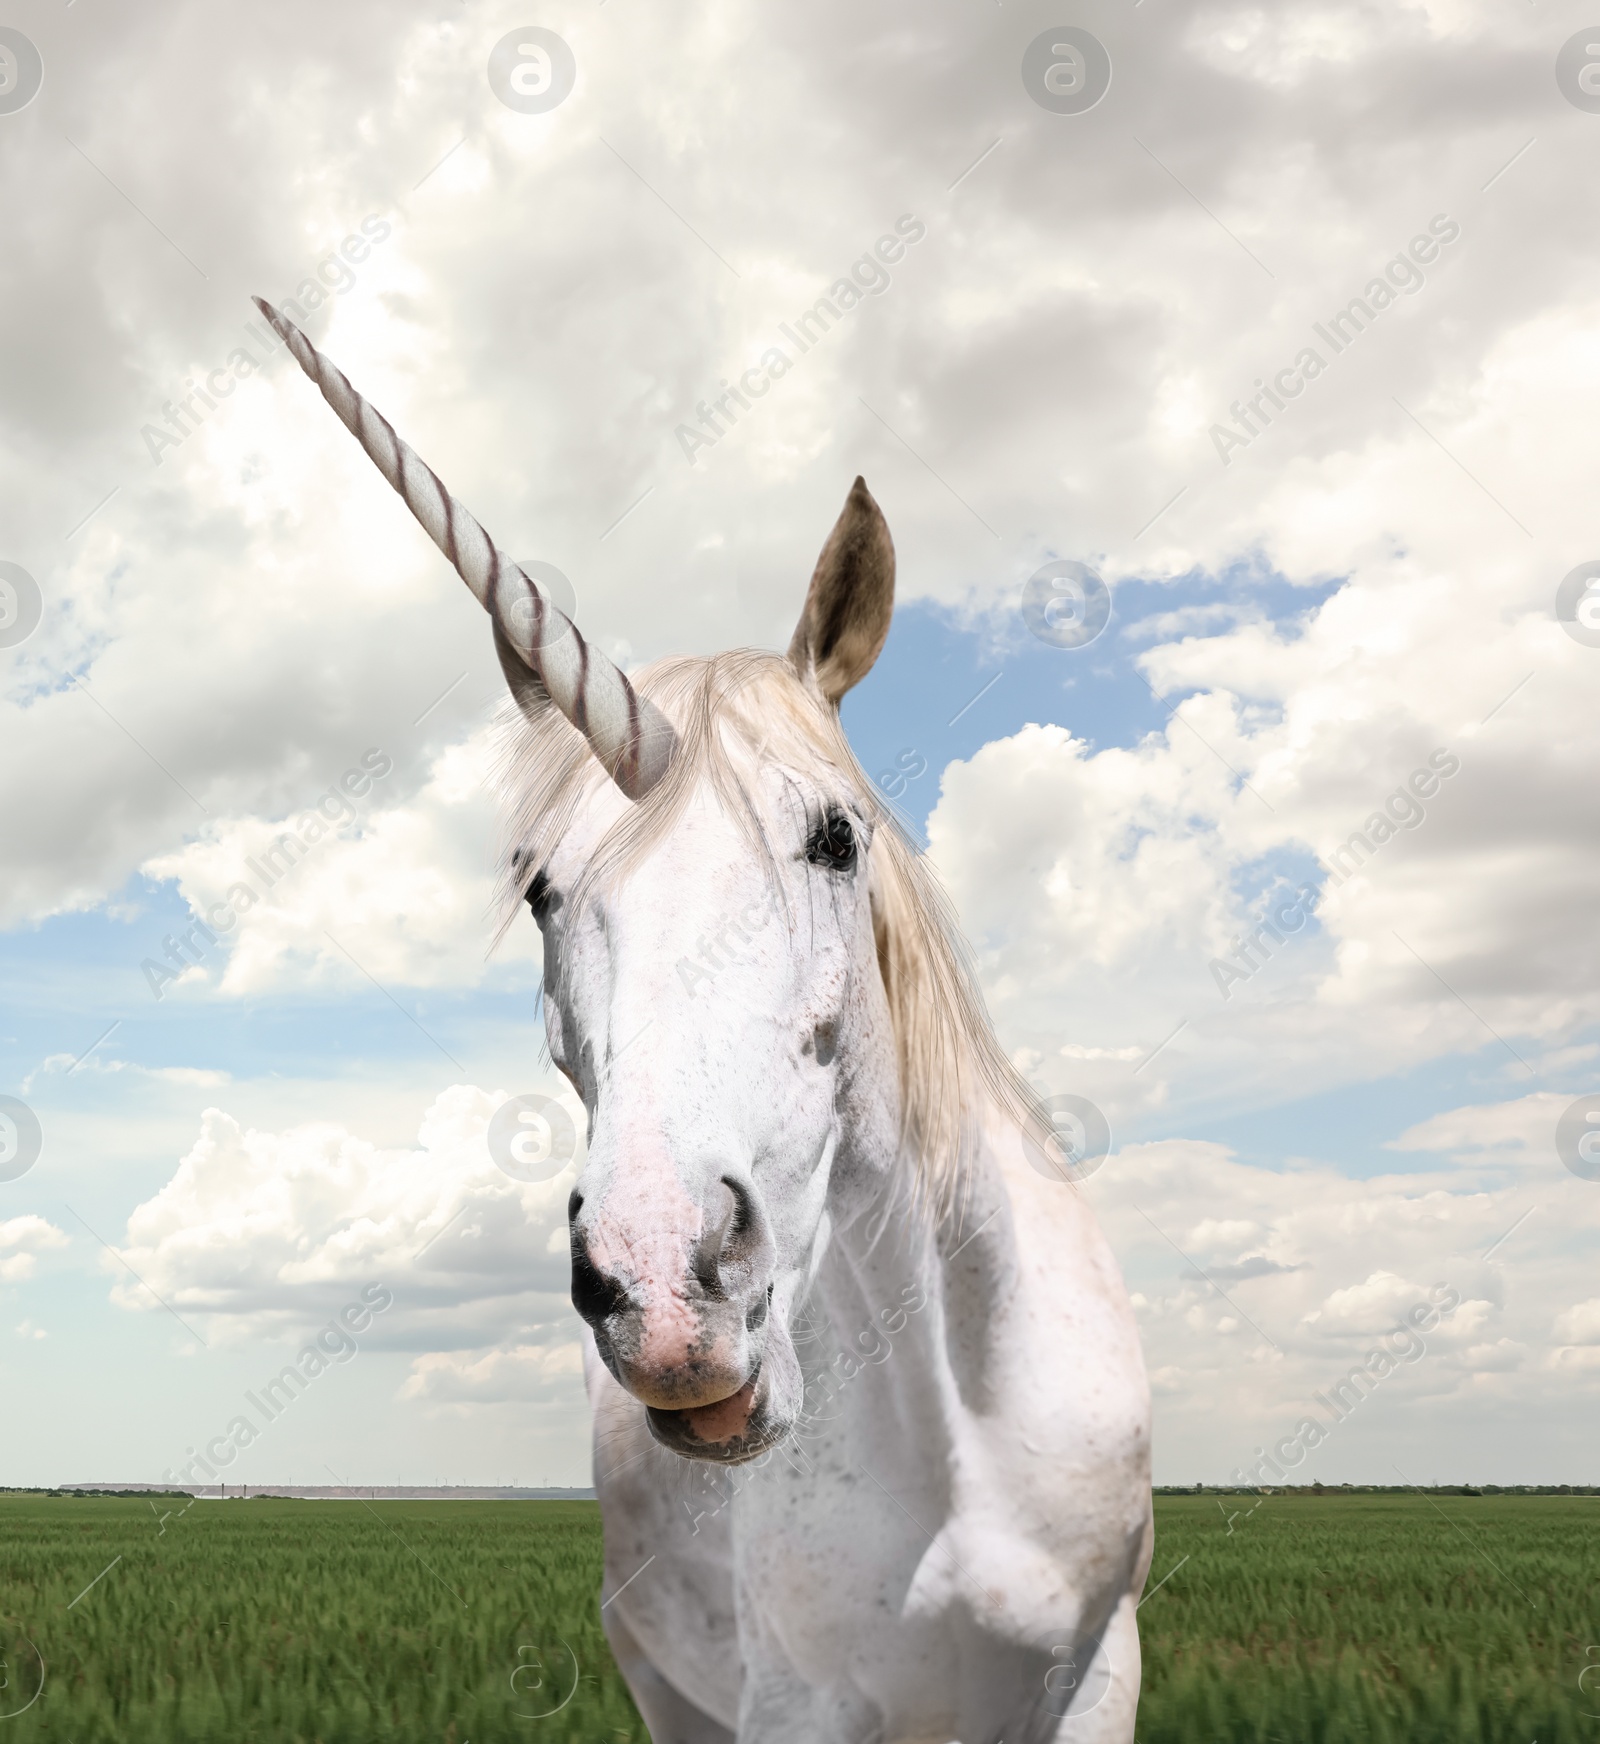 Image of Amazing unicorn with beautiful mane in field